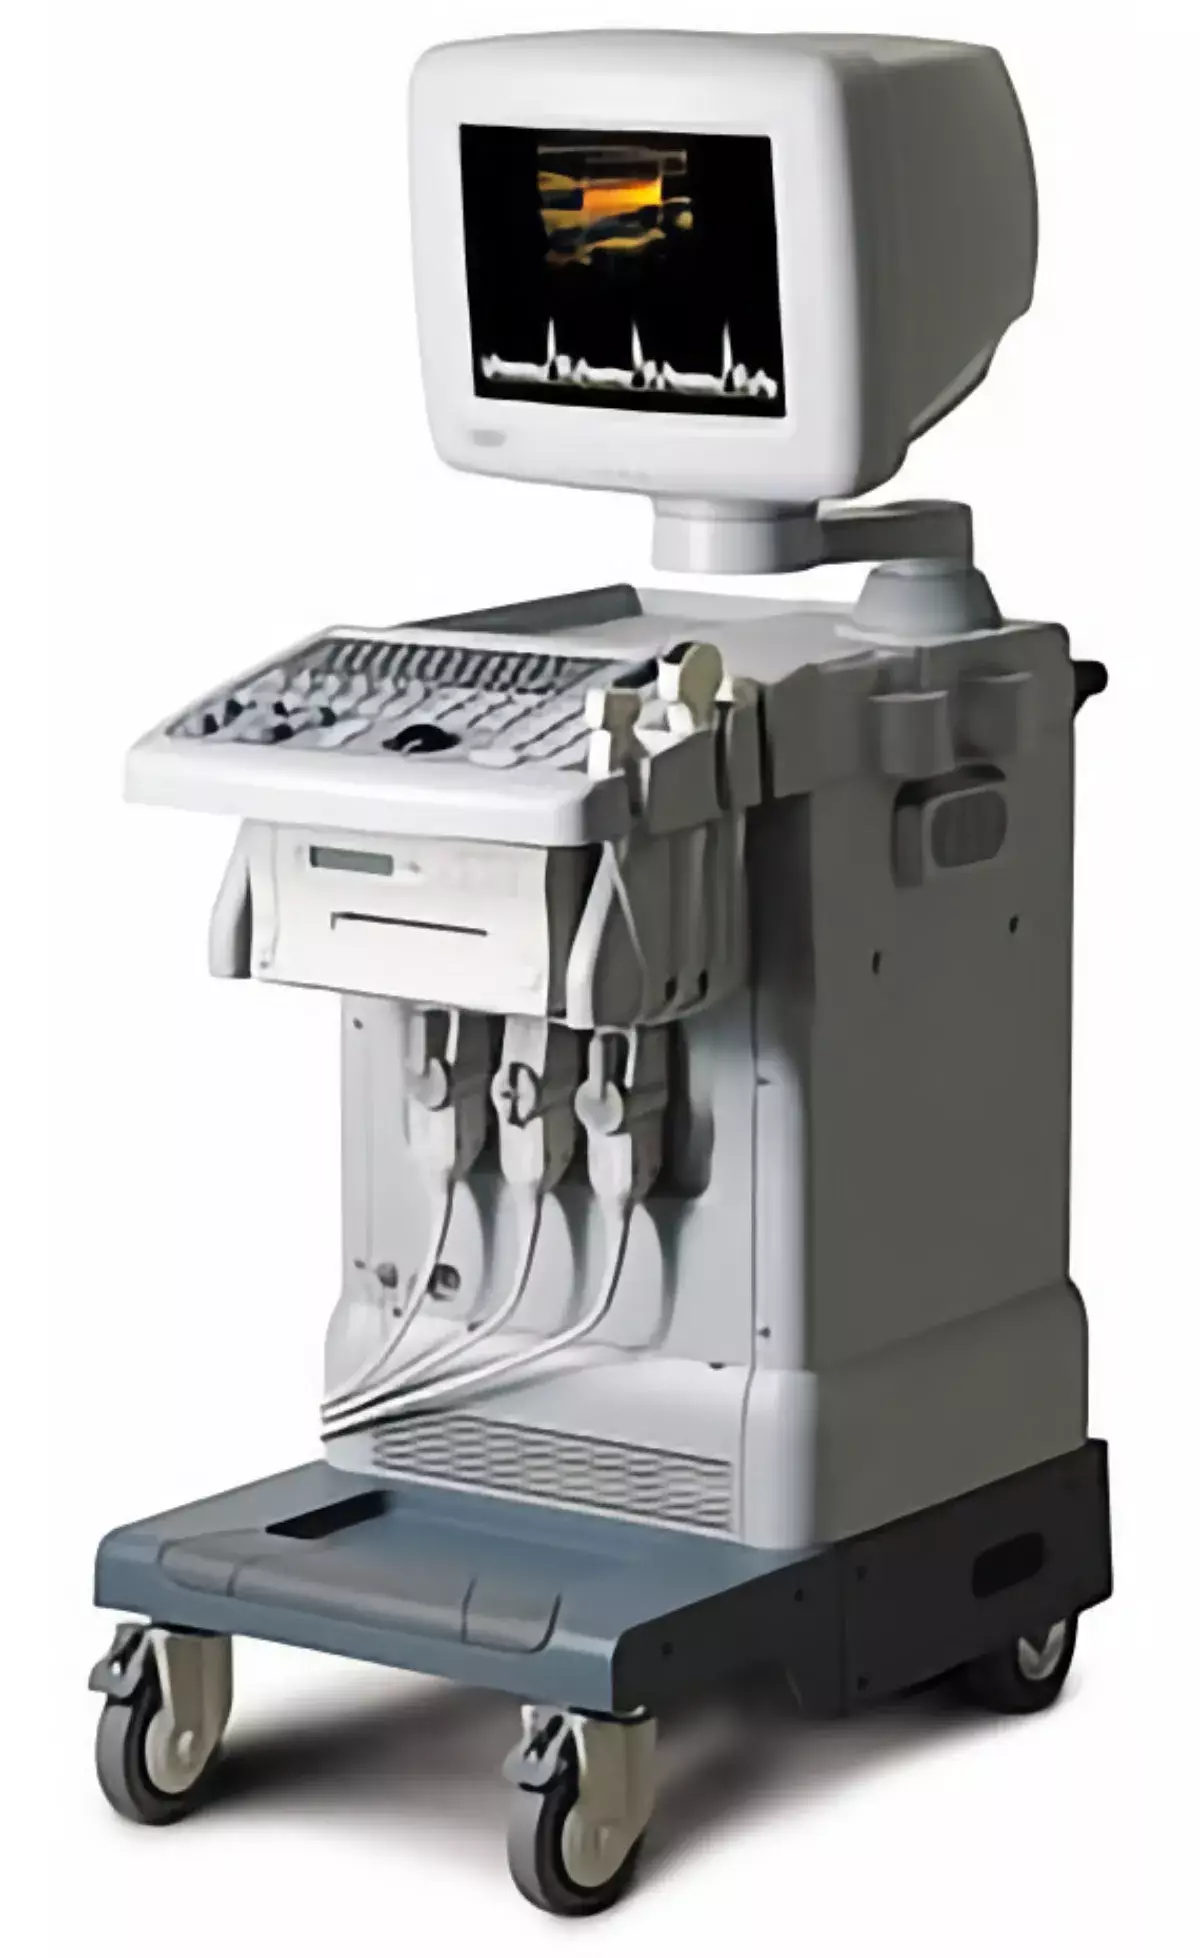 УЗИ сканер SonoAce-8000 SE (снят с производства)